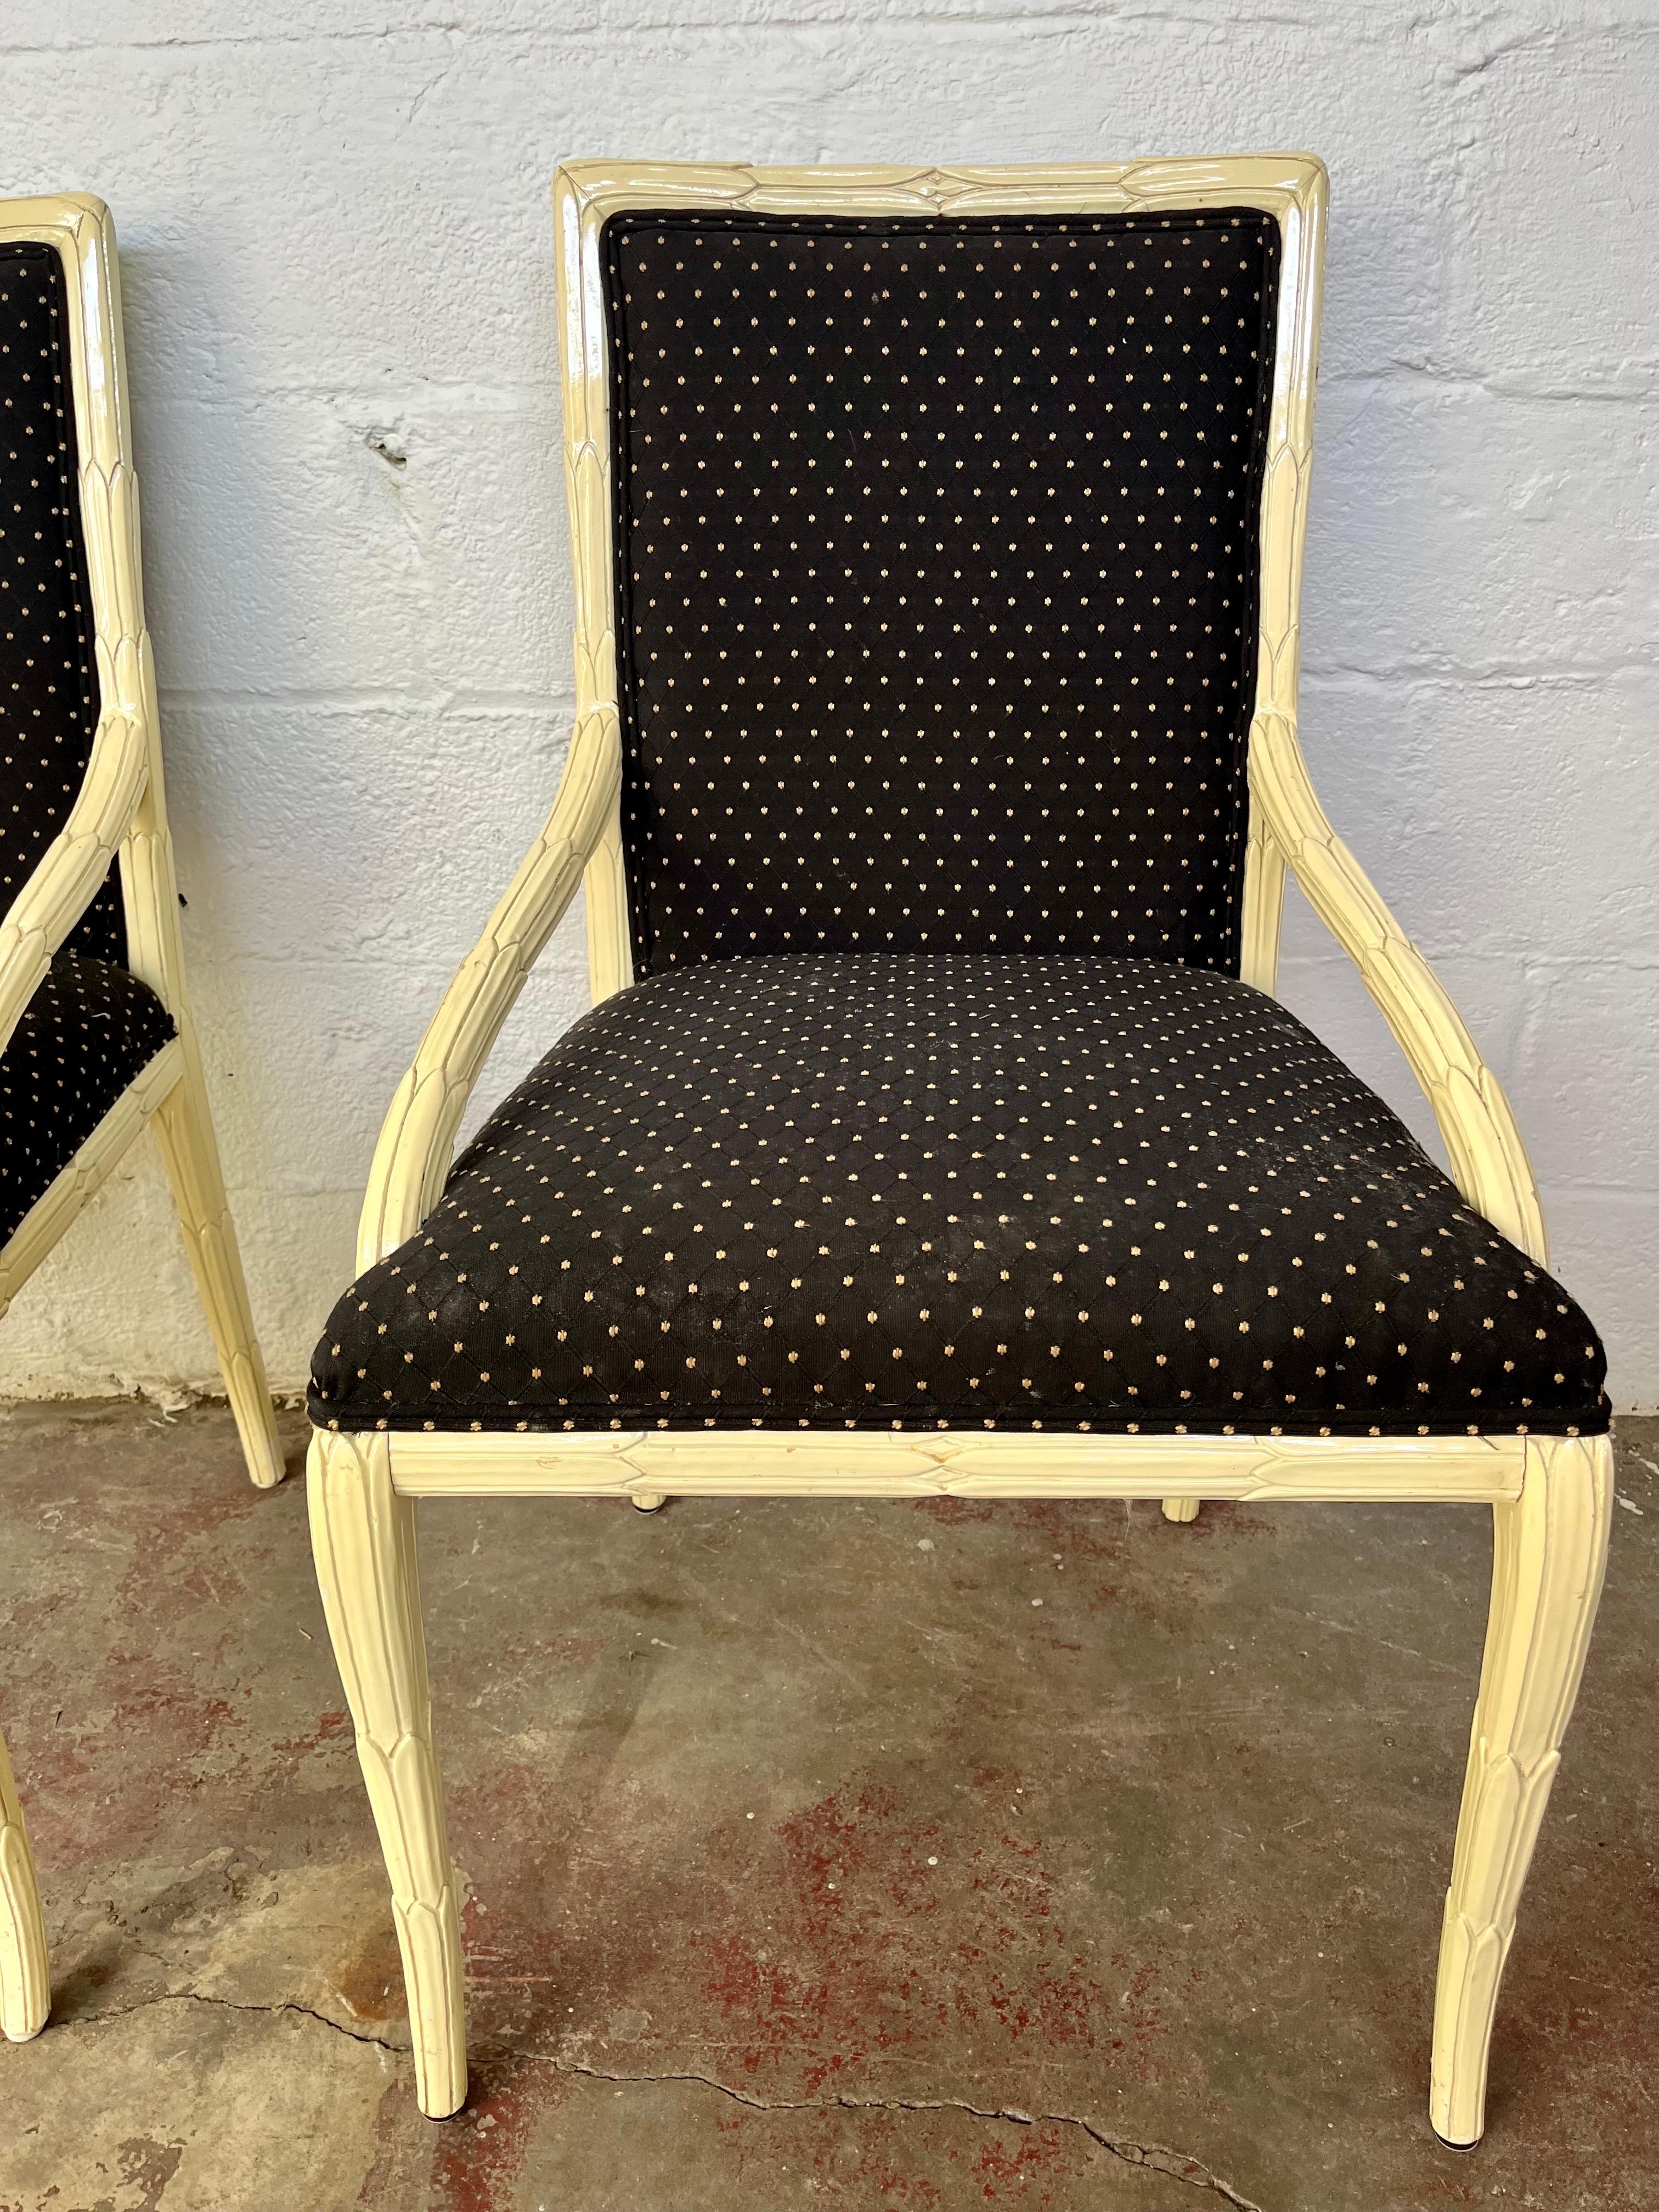 Hollywood Regency Palm Frond Esszimmerstühle. Tiefes Detail in lackierter Ausführung mit Polsterung. Century Chair Company Symbol.
Bordsteinkante nach NYC/Philly $400